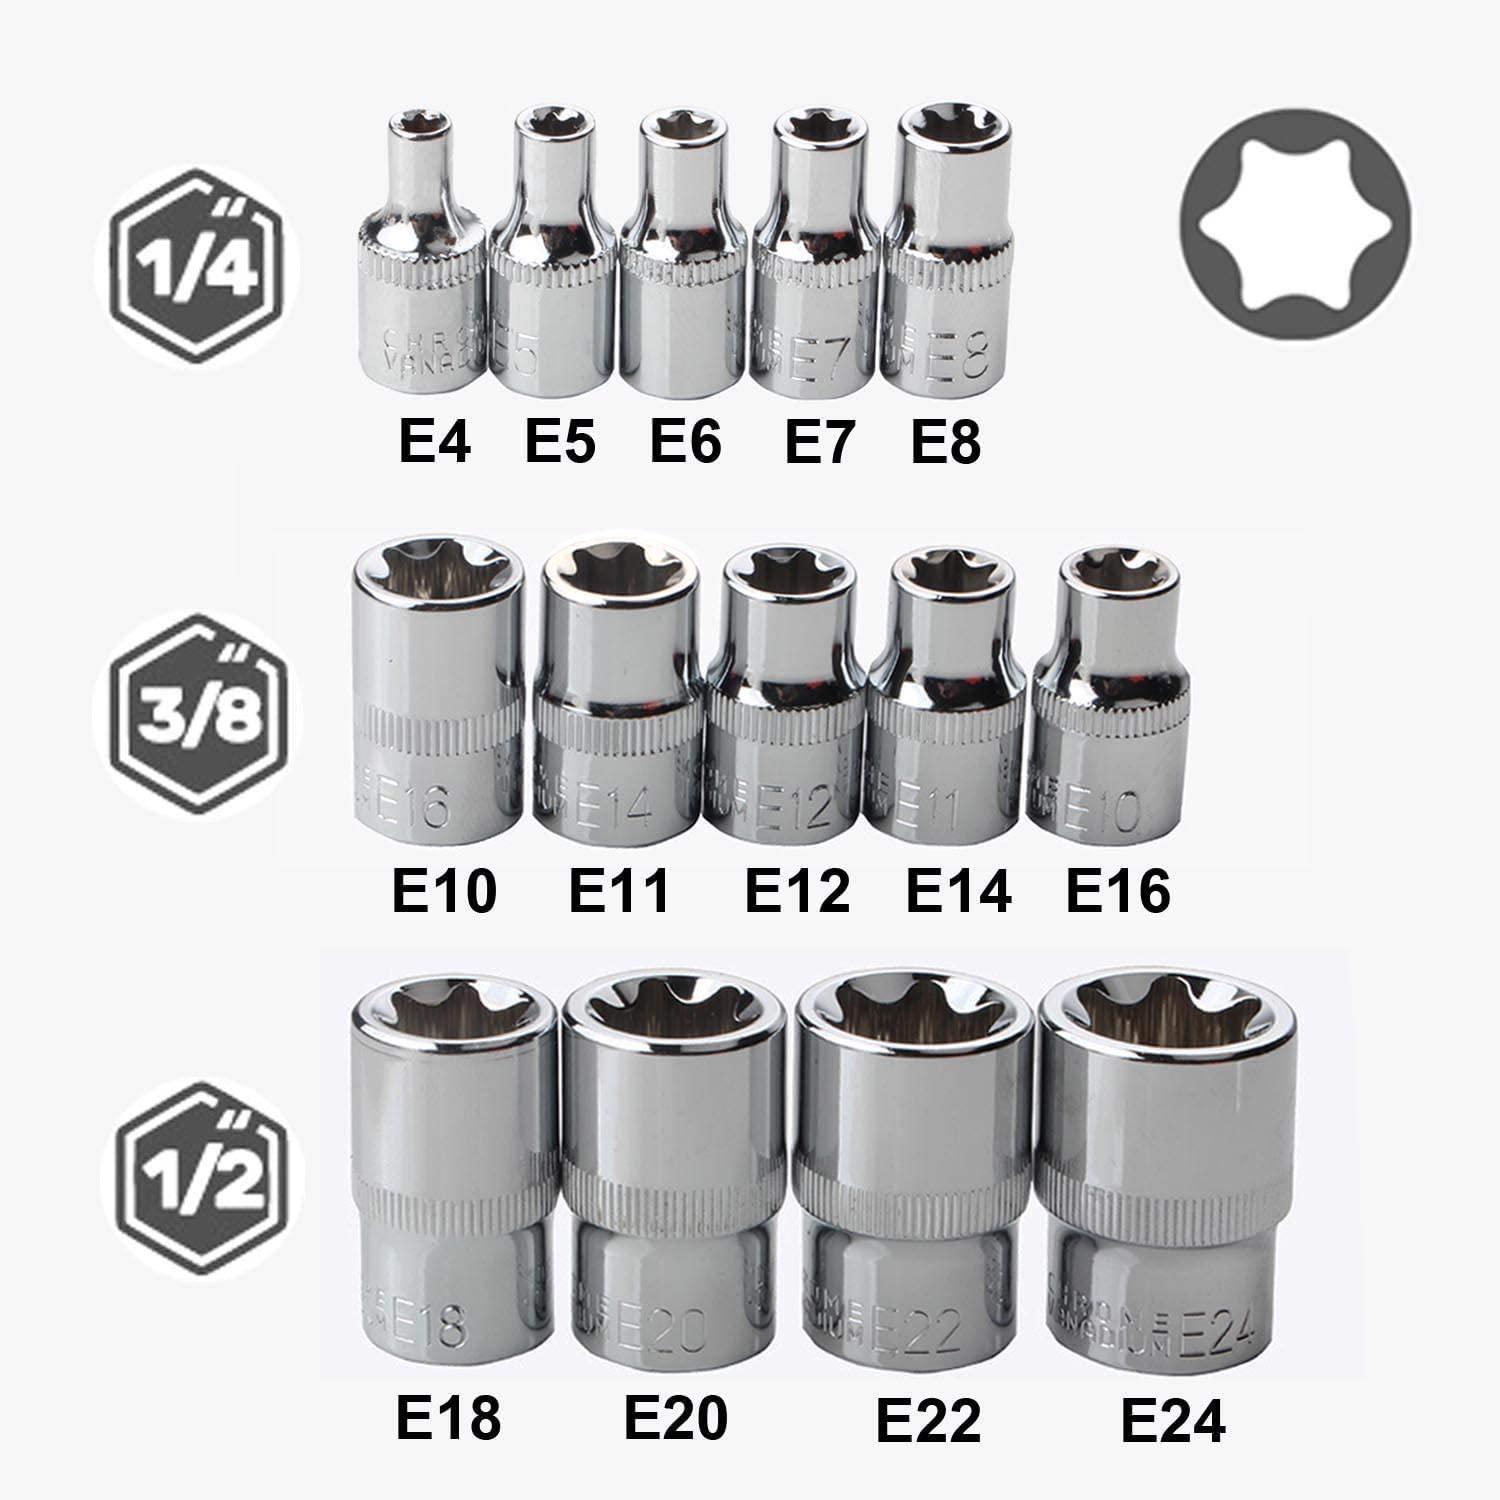 lslansoon female e torx socket set with case, 1/4, 3/8, 1/2 in. drive e4-e24 external torque star socket kit, 14pcs